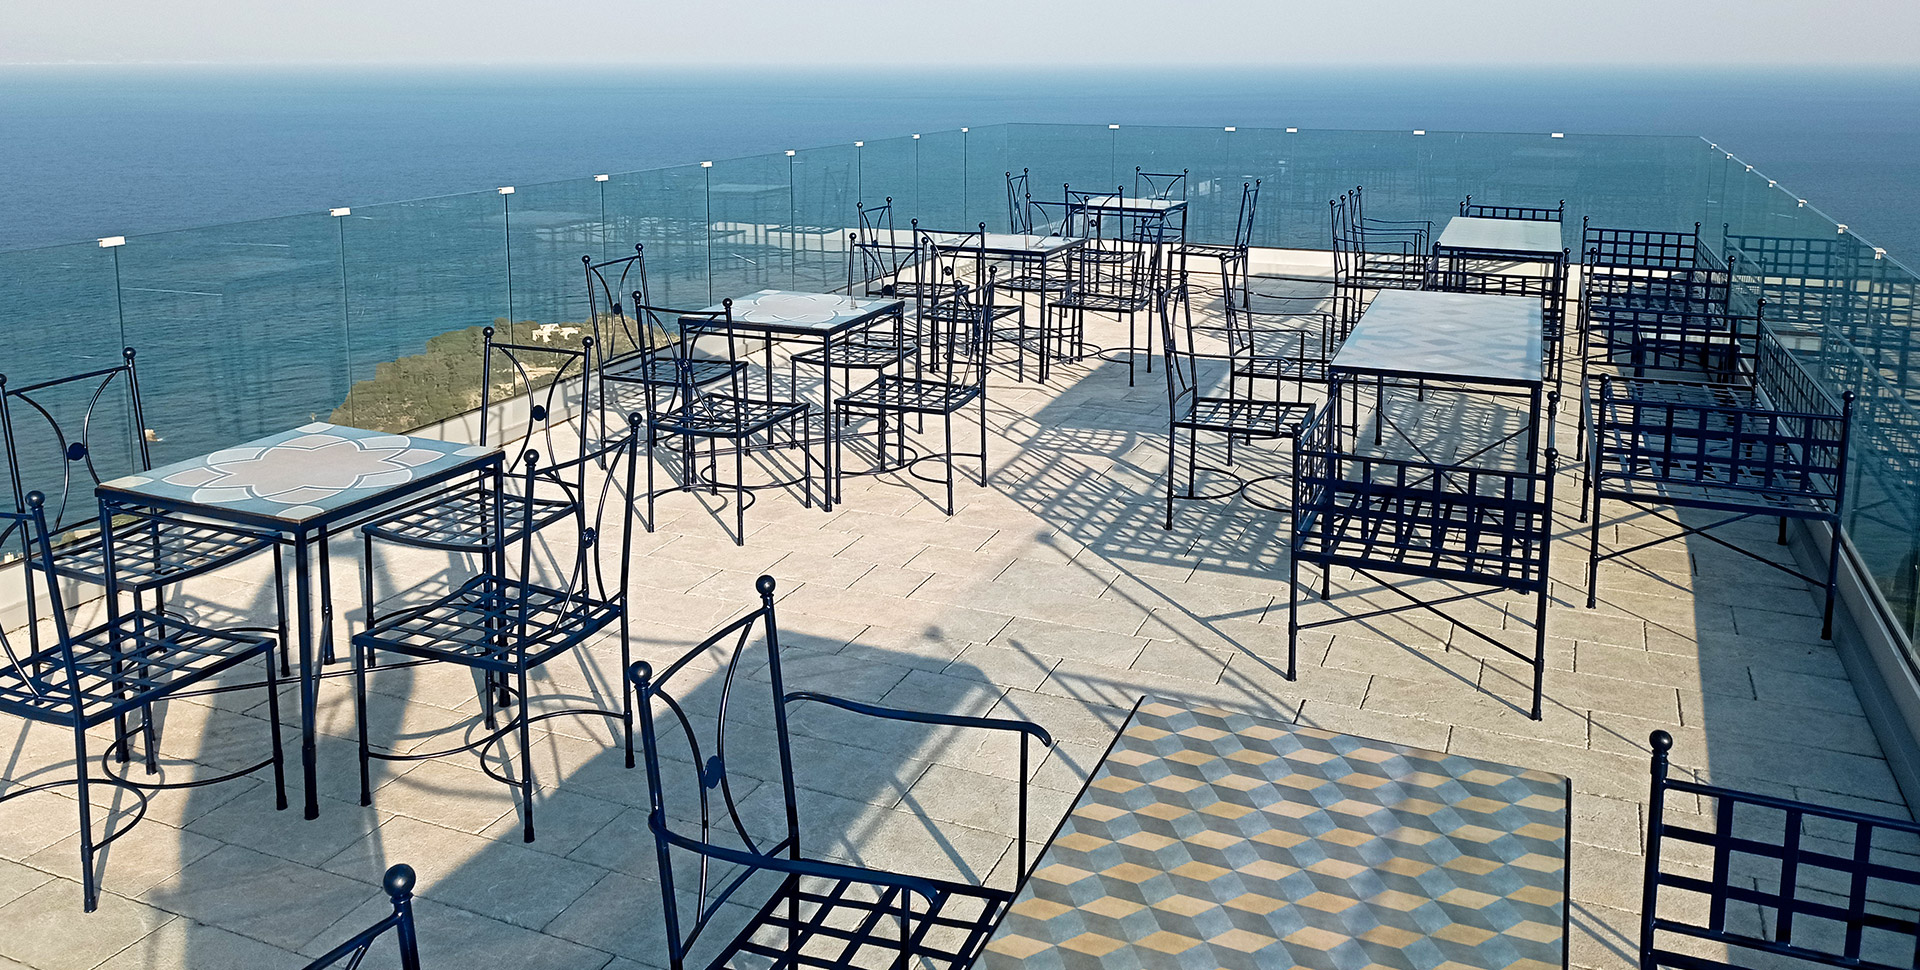 Tavoli in pietra lavica quadrati e rettangolari in fotoceramica presenti a Taormina